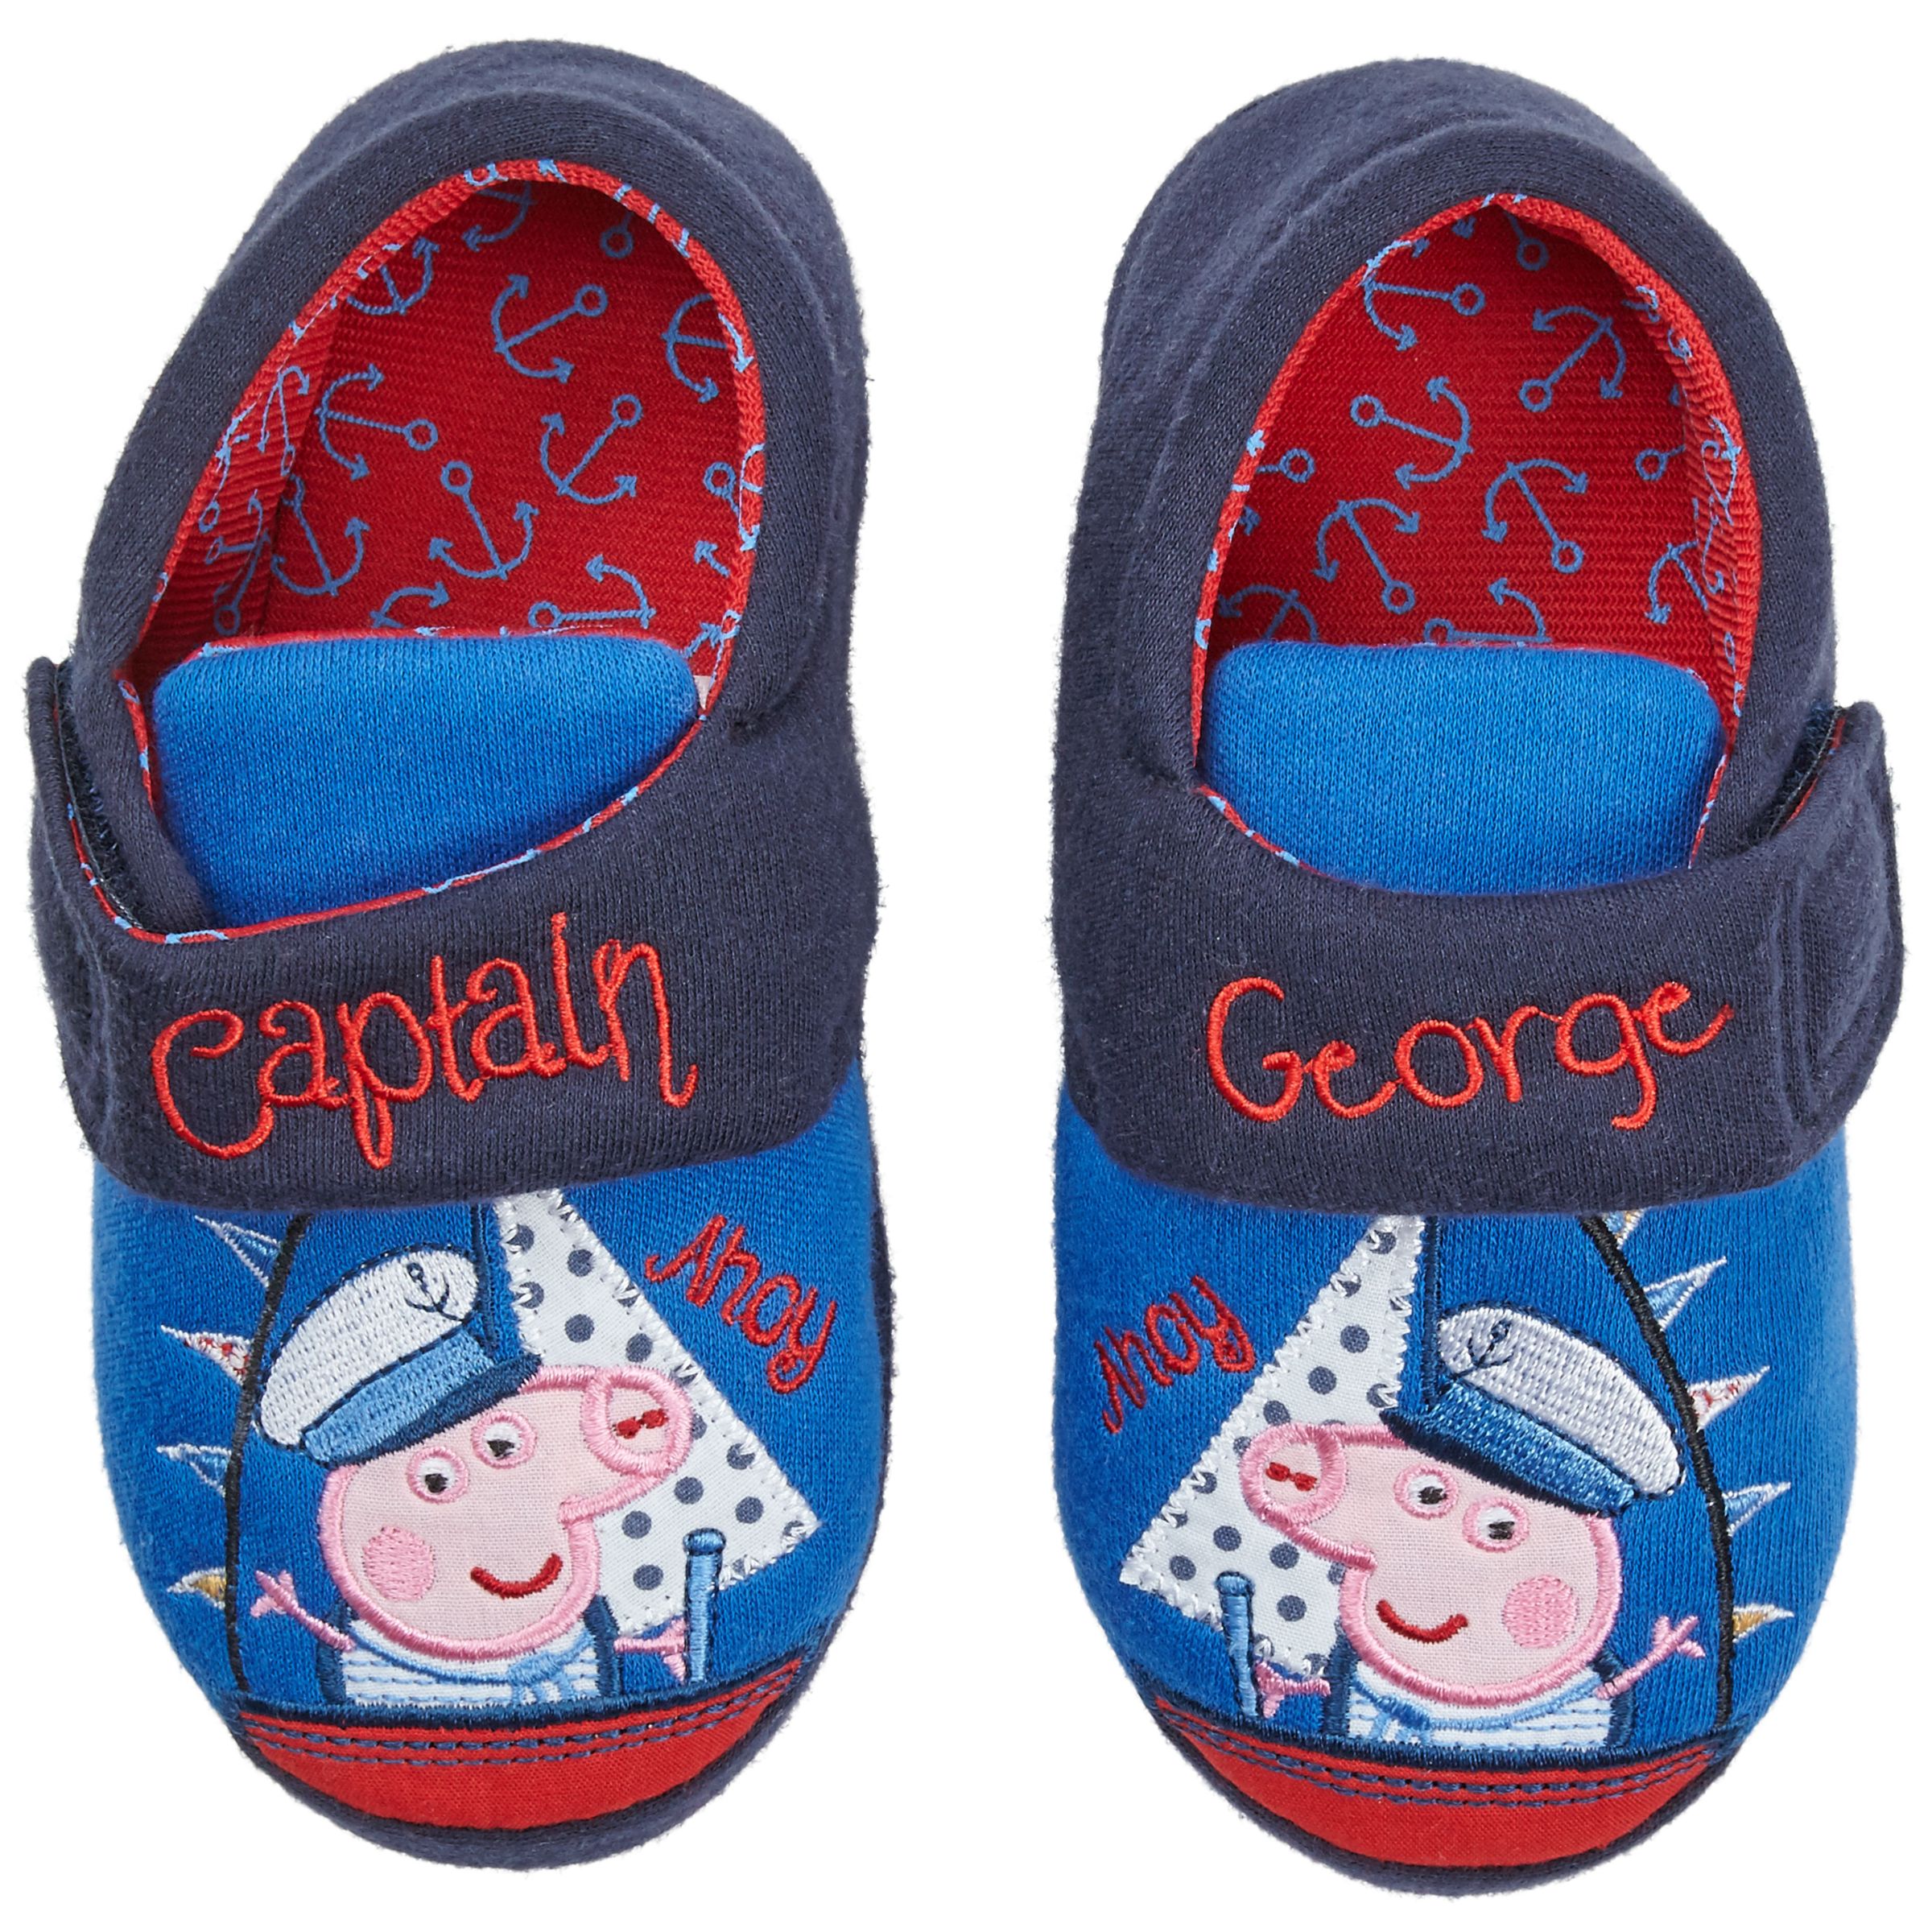 george boys slippers